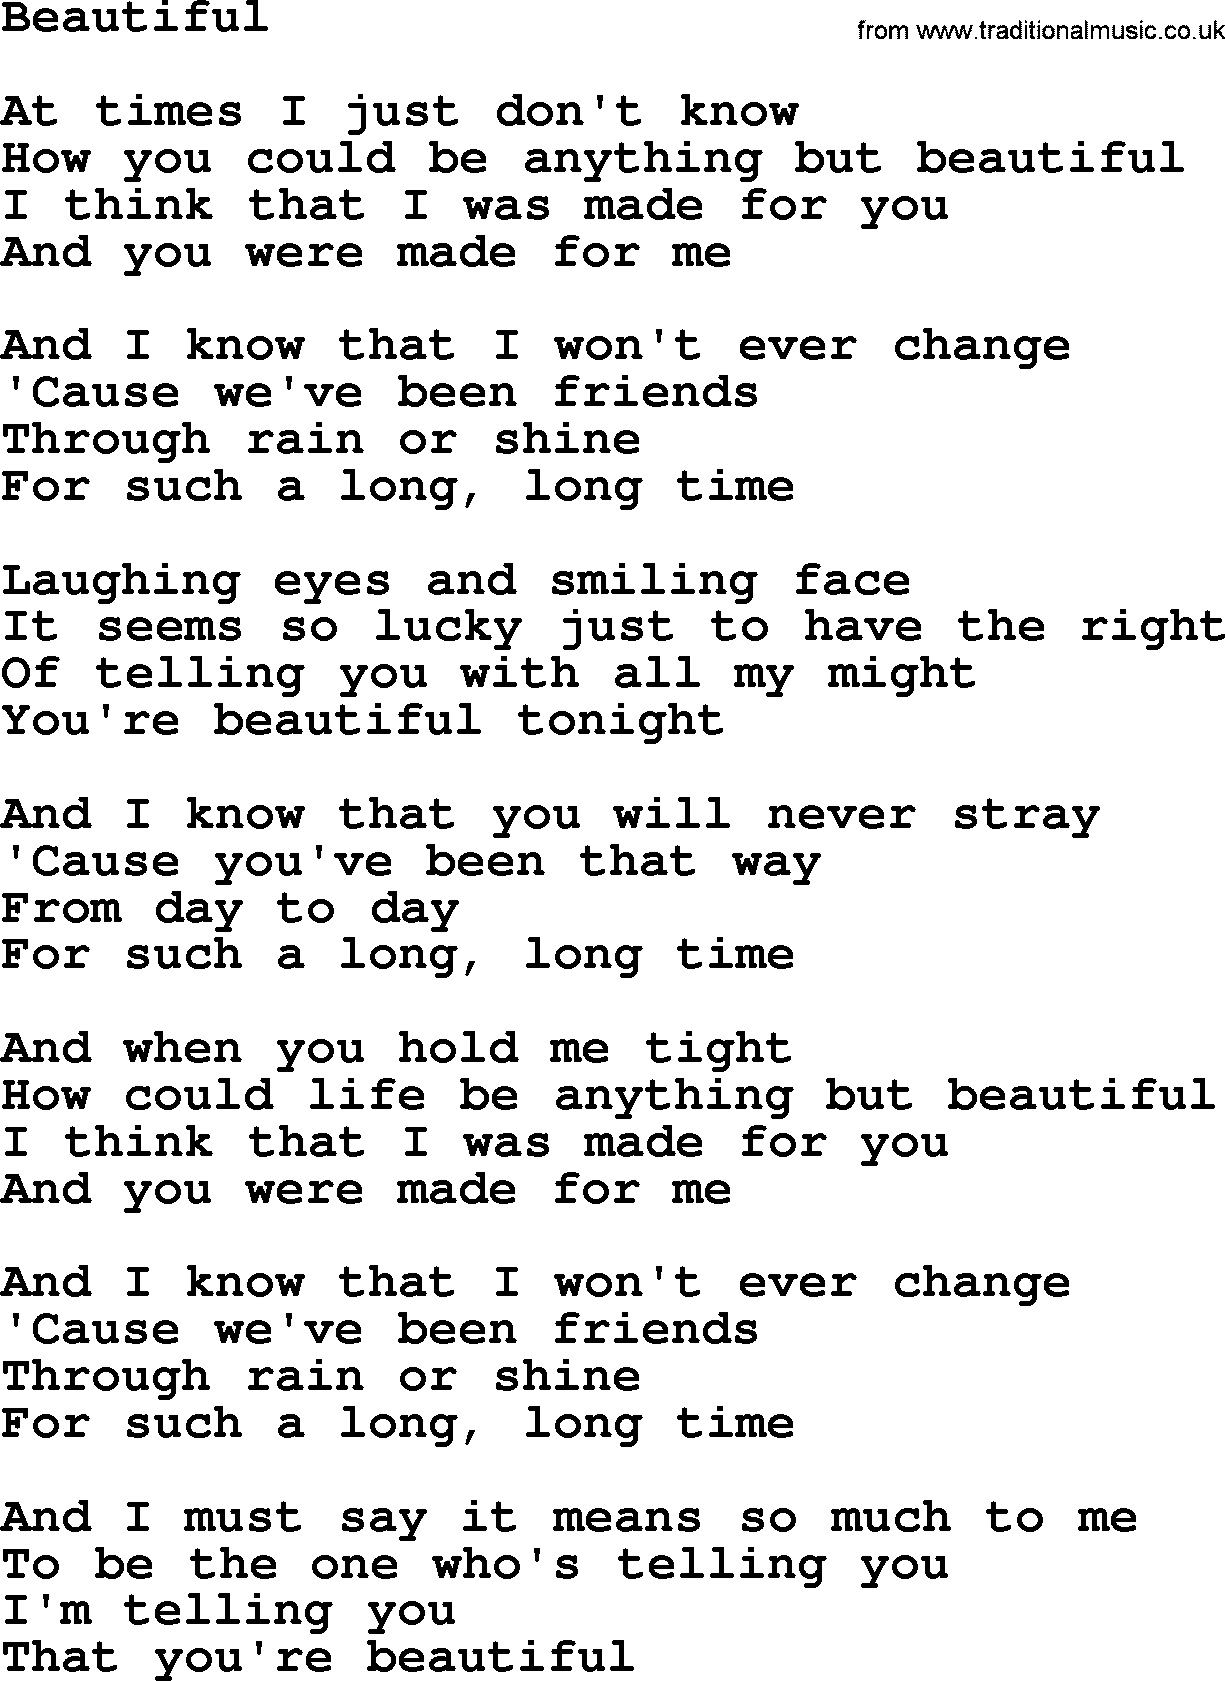 Gordon Lightfoot song Beautiful, lyrics